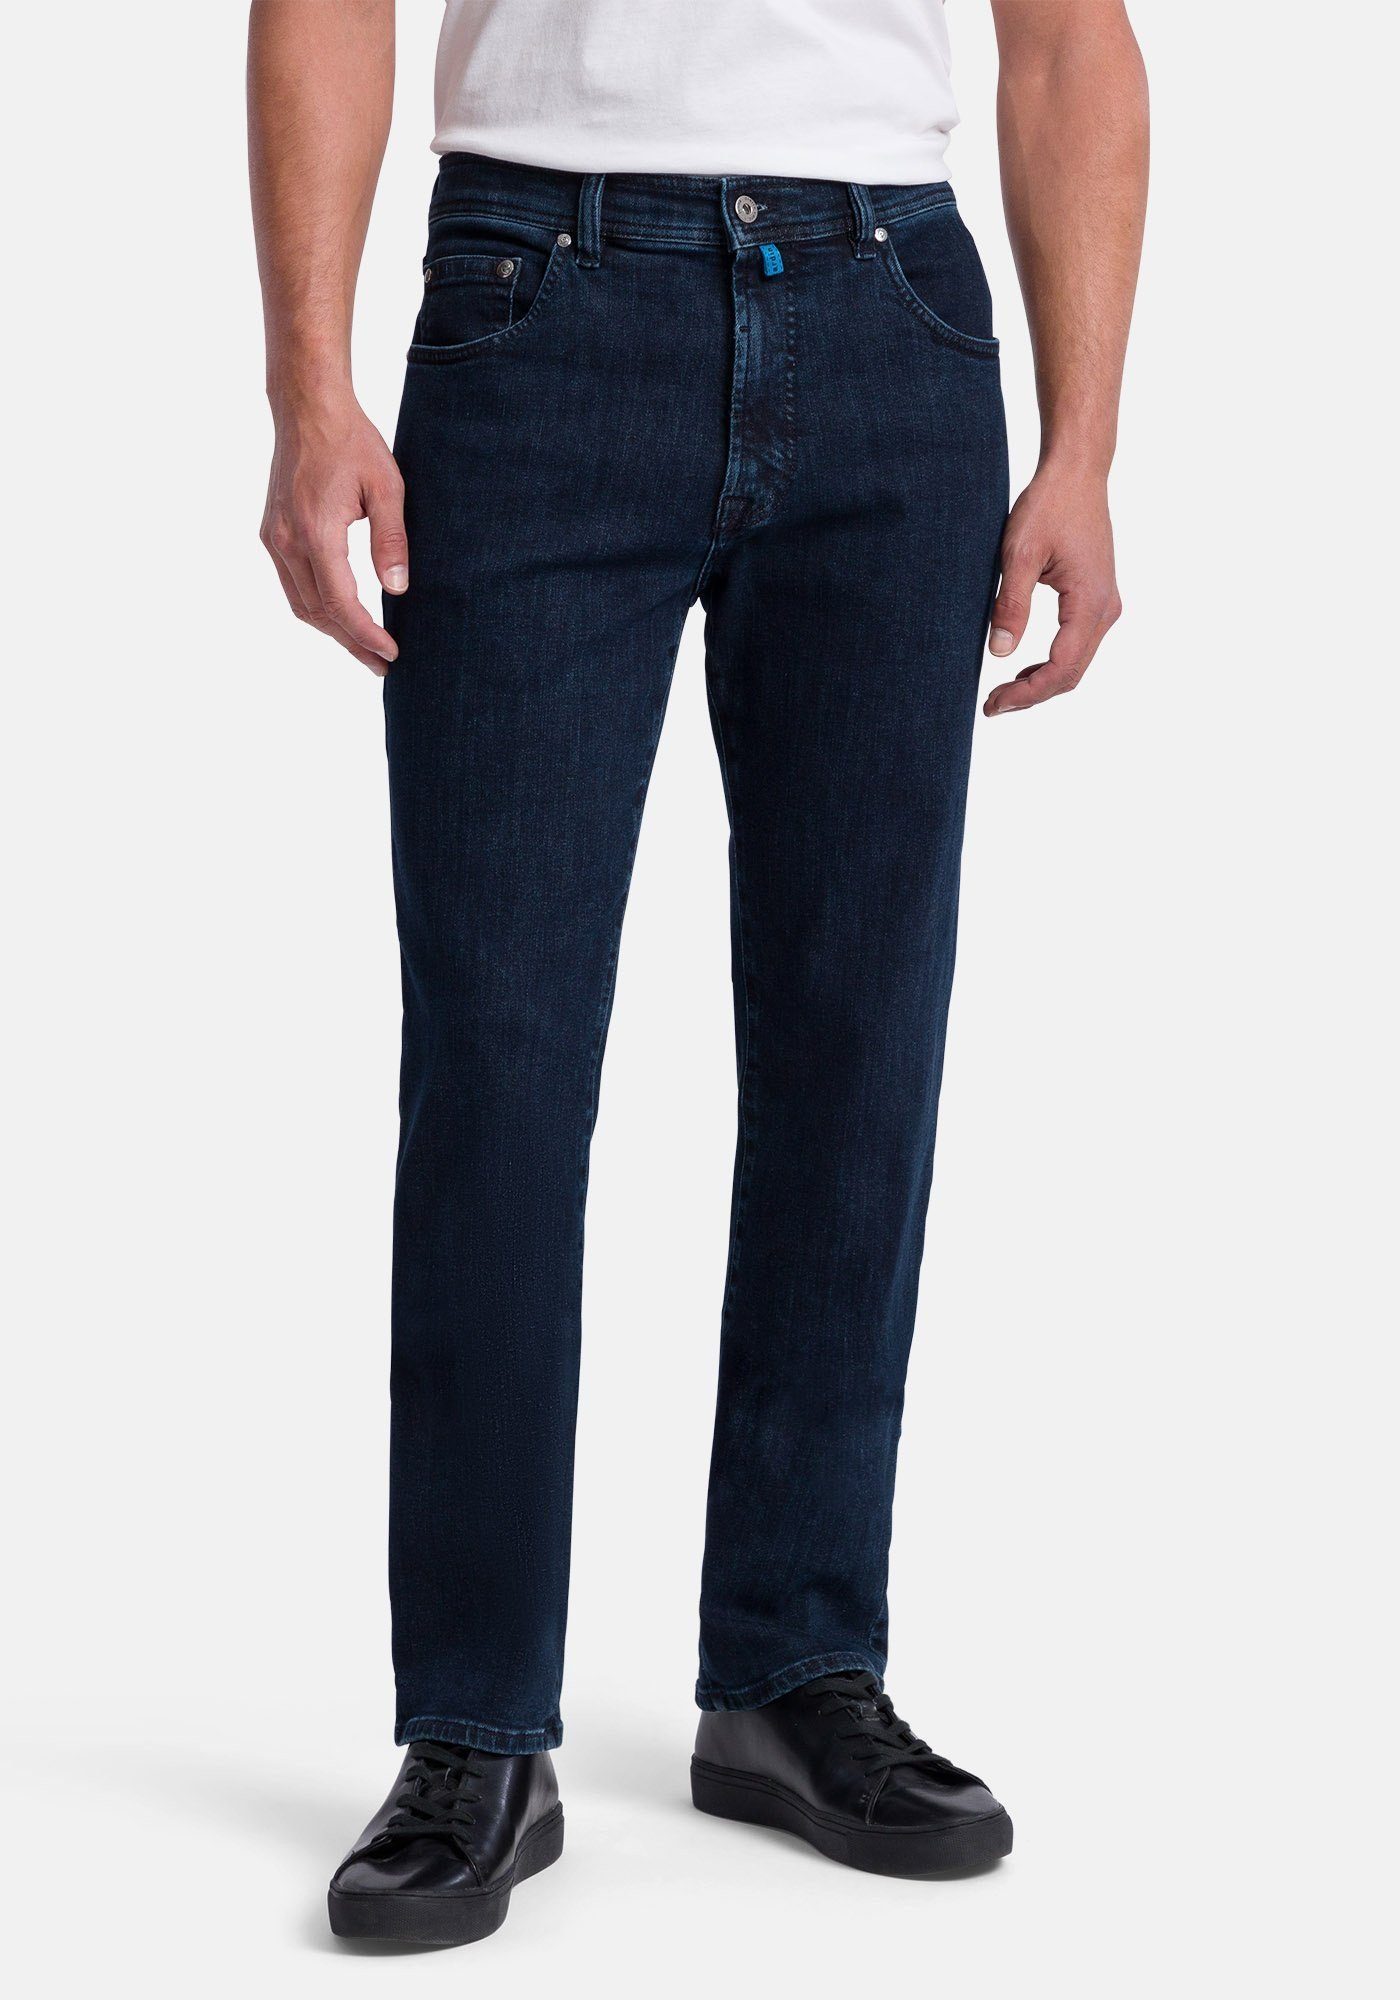 Pierre Cardin 5-Pocket-Jeans stonewash Stretch Rivet Comfort Dijon dark Fit Green blue Denim